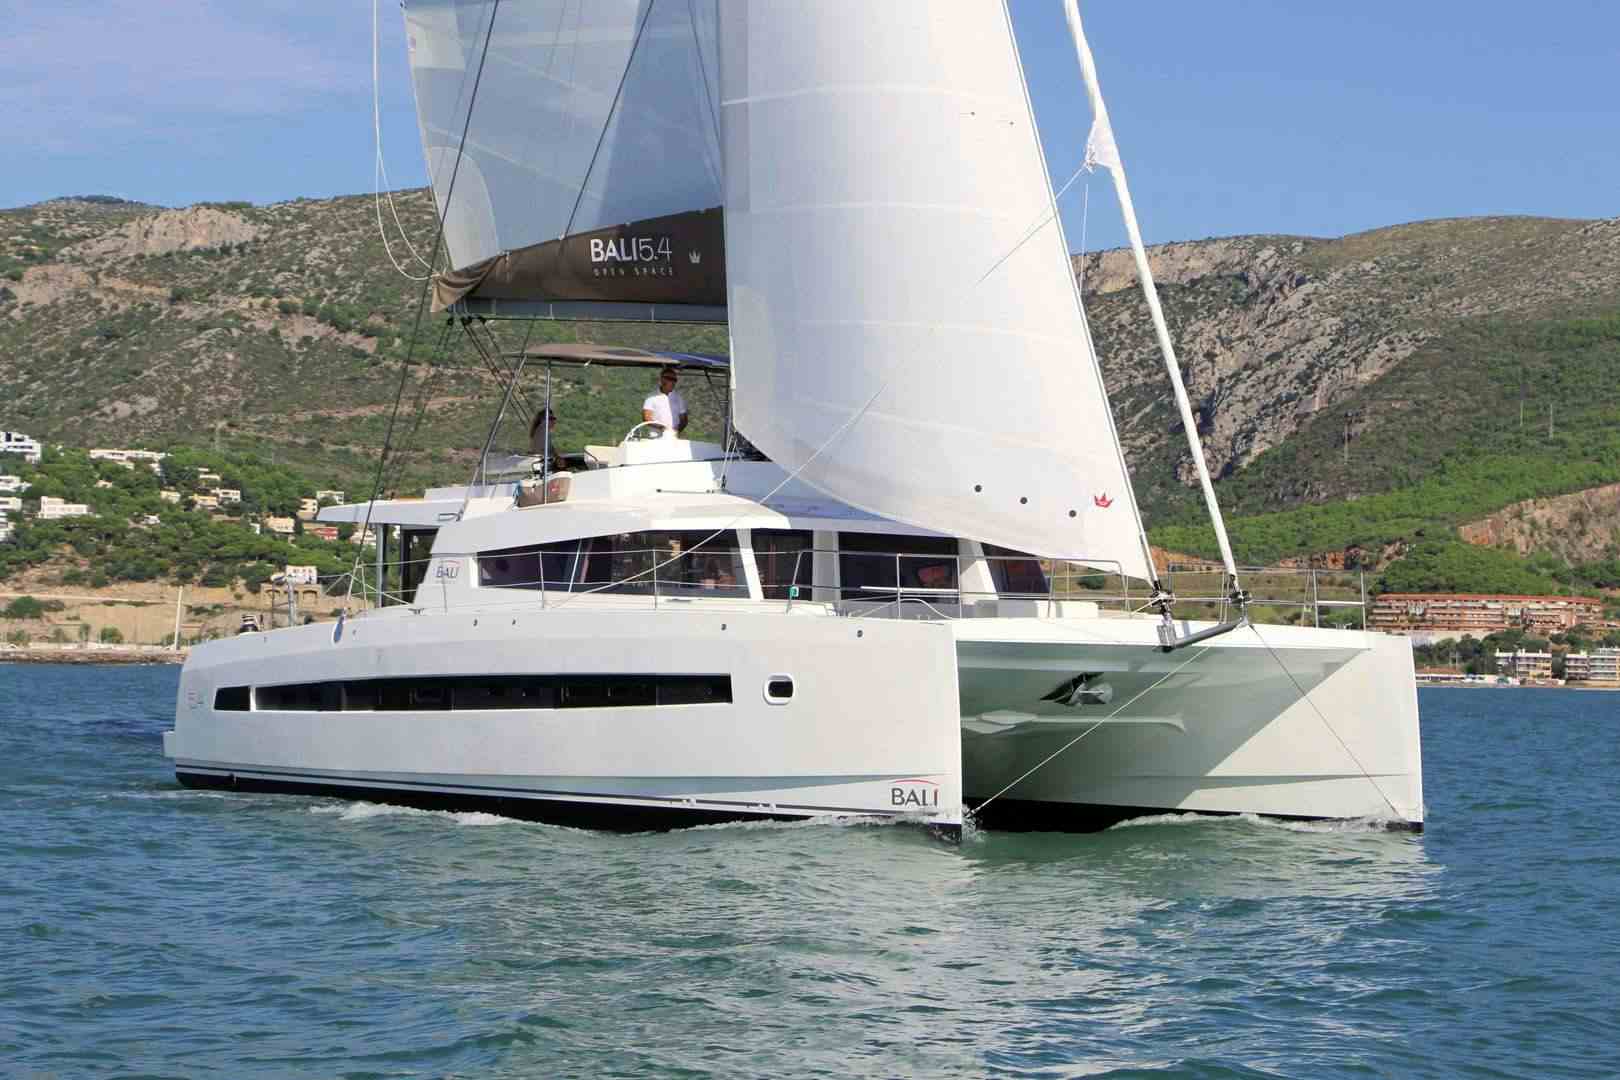 TWO OCEANS - Yacht Charter Alcudia & Boat hire in W. Med - Spain/Balearics, Caribbean Leewards, Caribbean Windwards, Caribbean Virgin Islands (BVI) 1